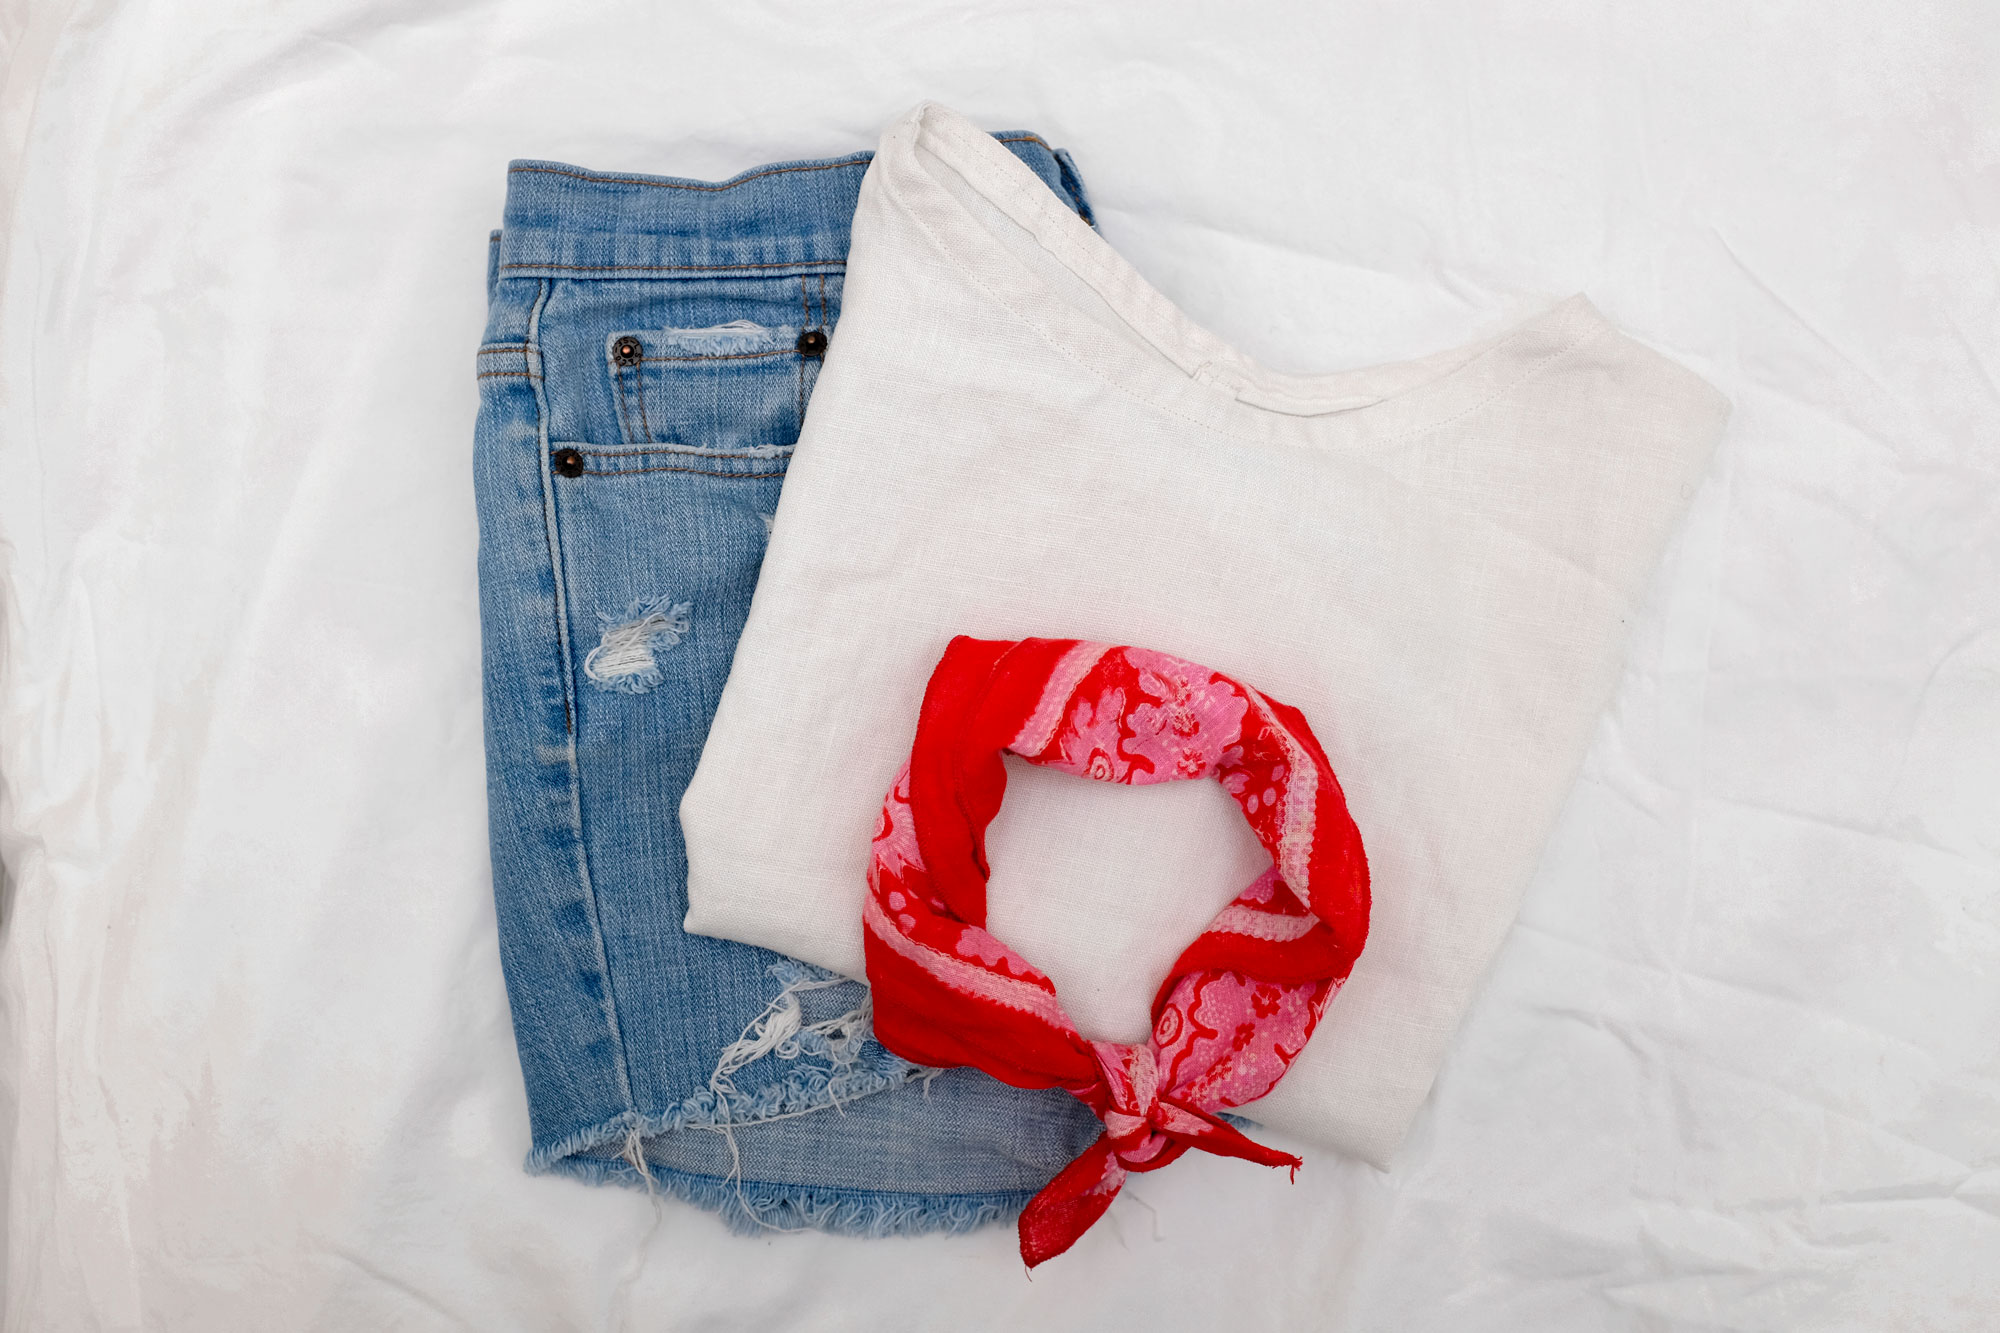 A white tee, red bandana, and blue denim shorts